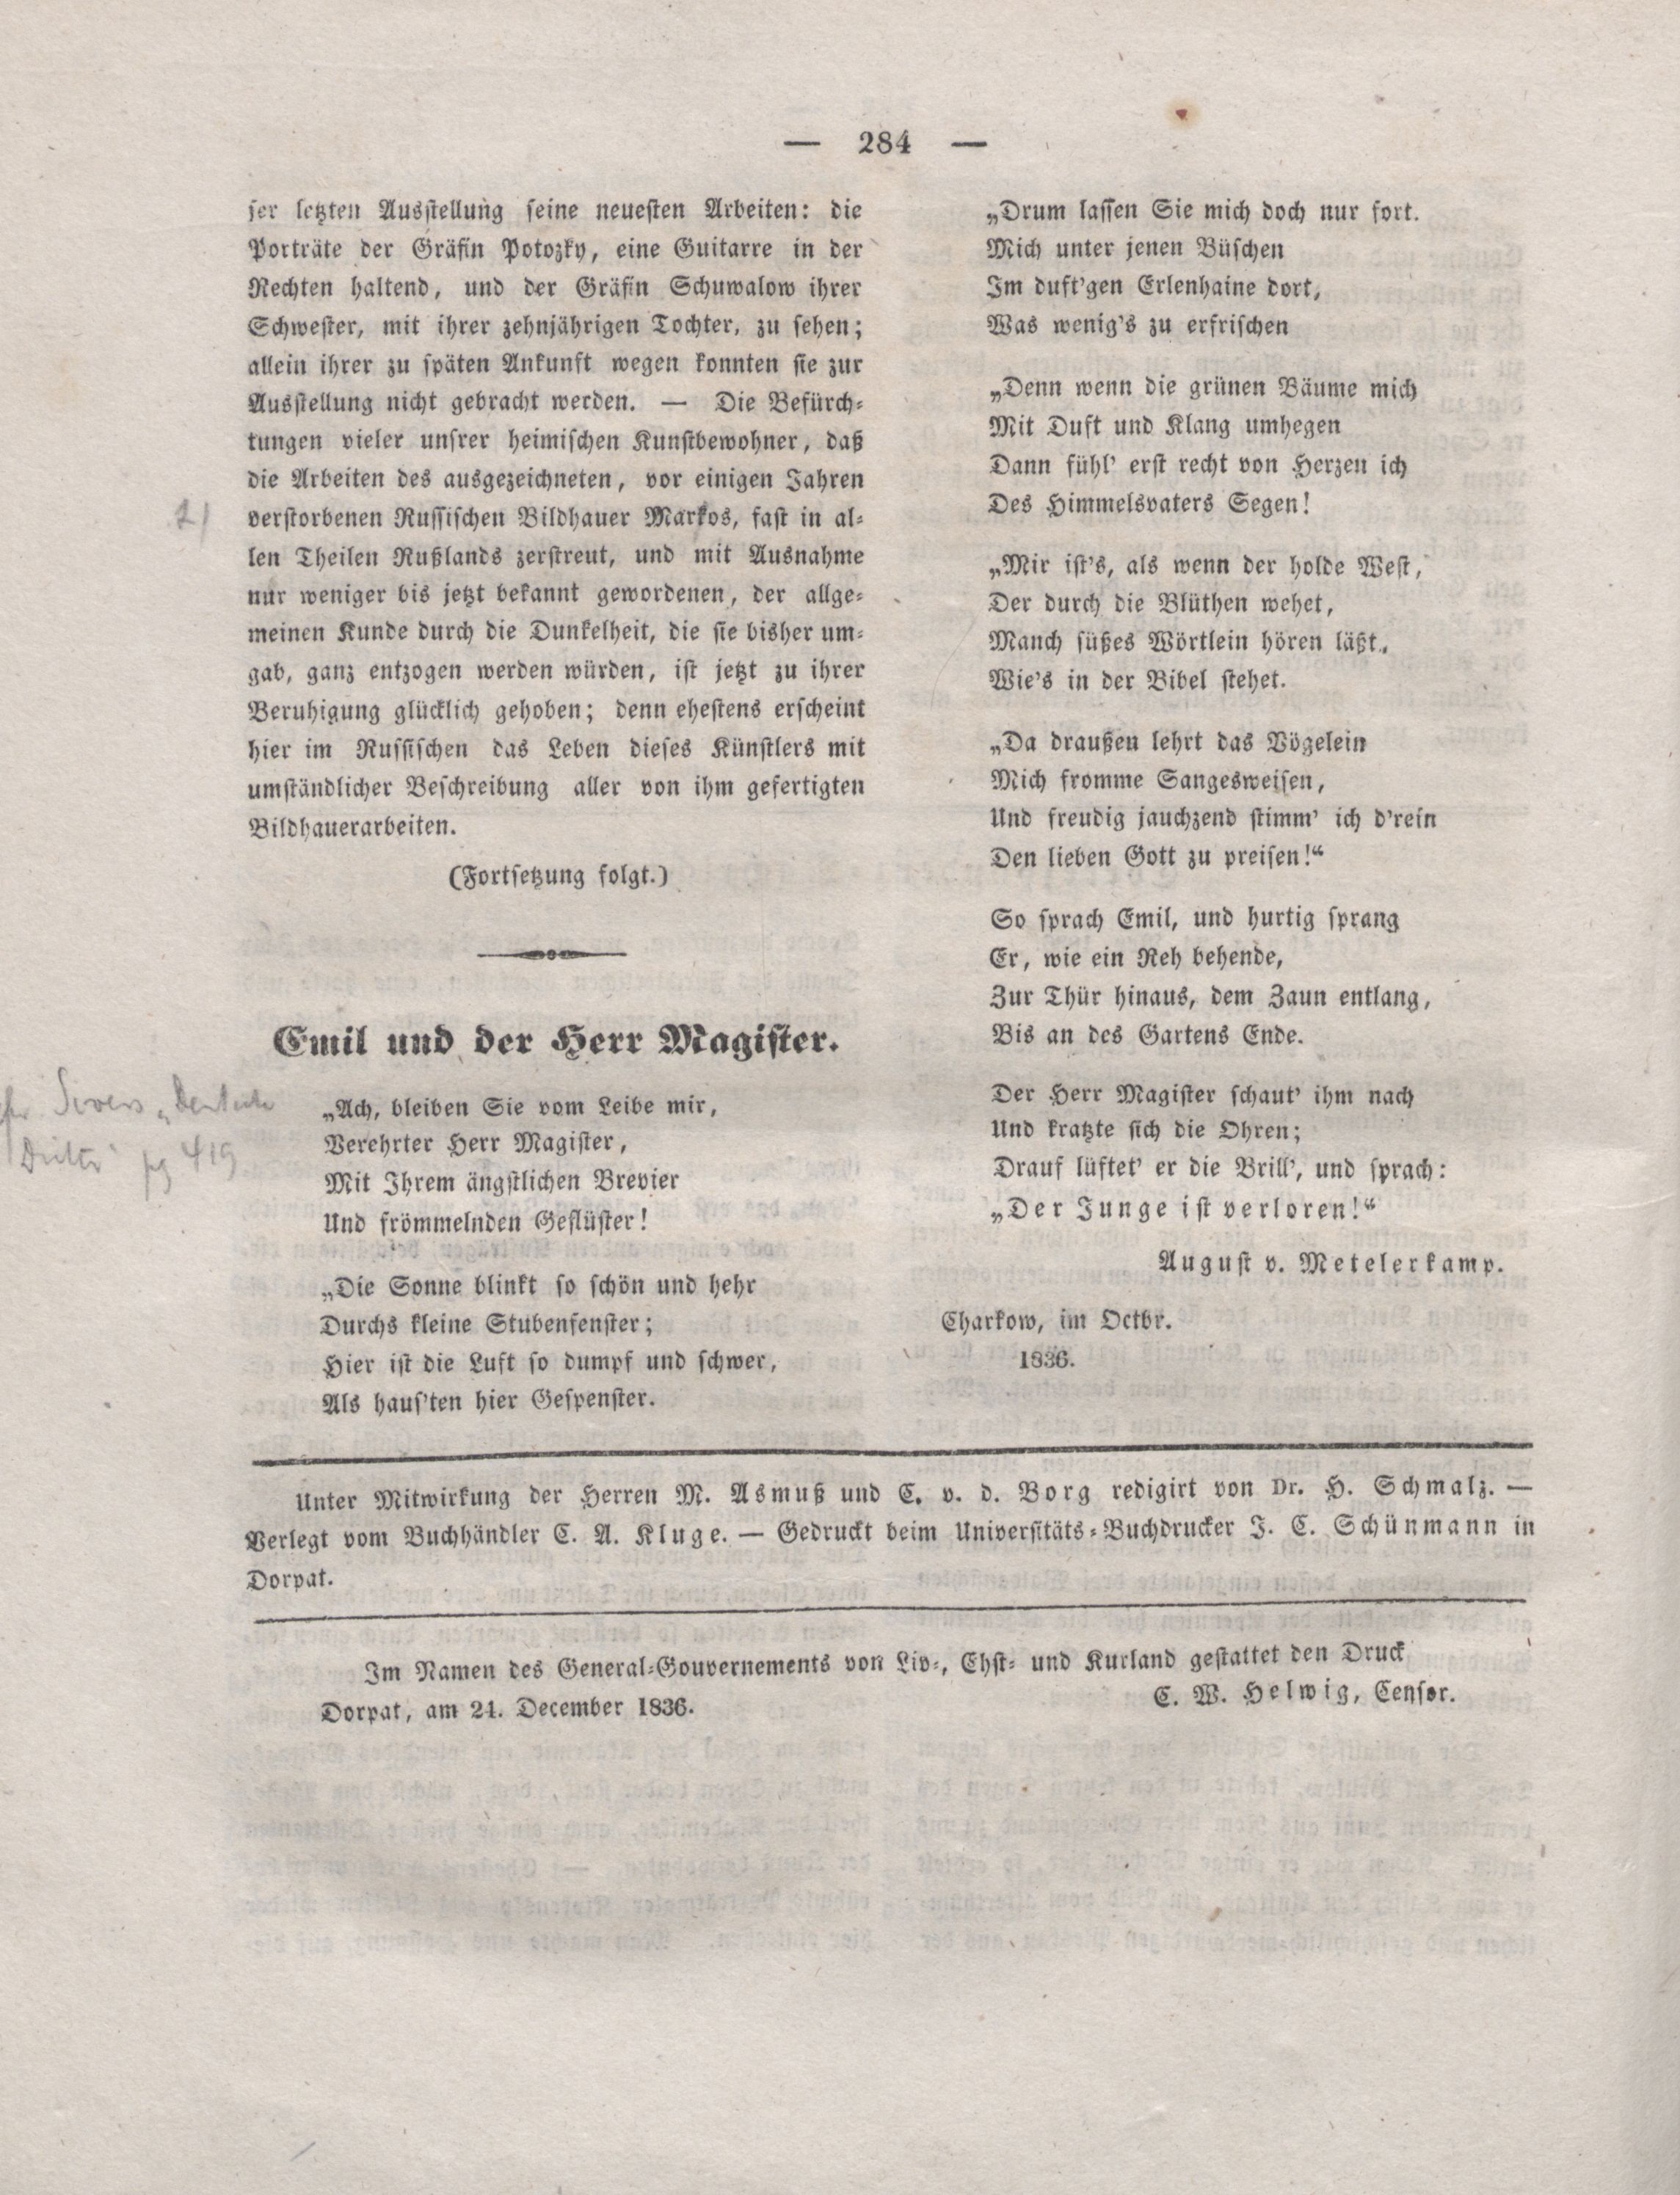 Der Refraktor [1836] (1836) | 285. (284) Main body of text